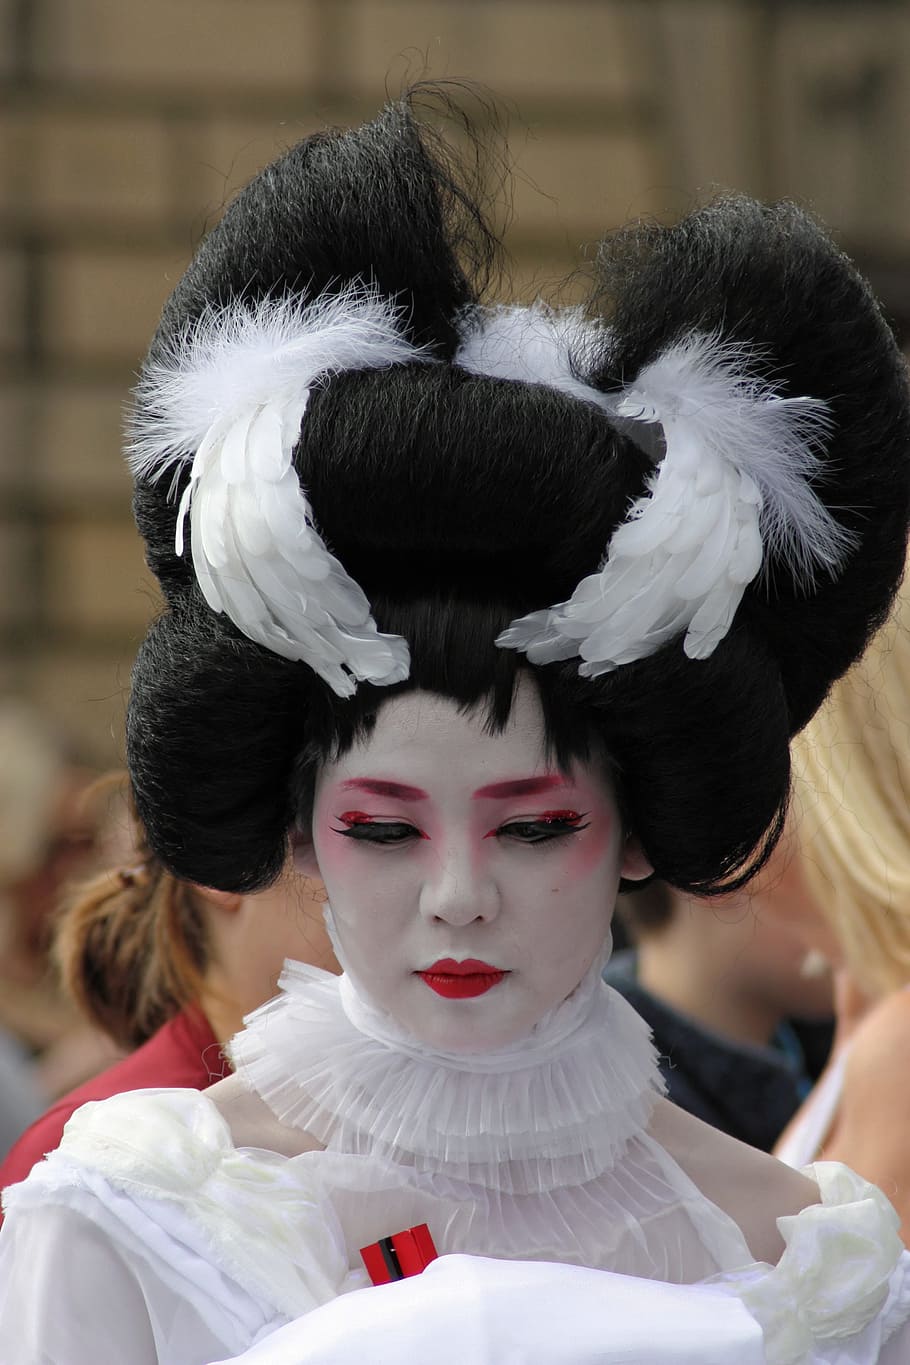 woman, geisha costume, head, female, girl, face, young, beautiful, person, portrait